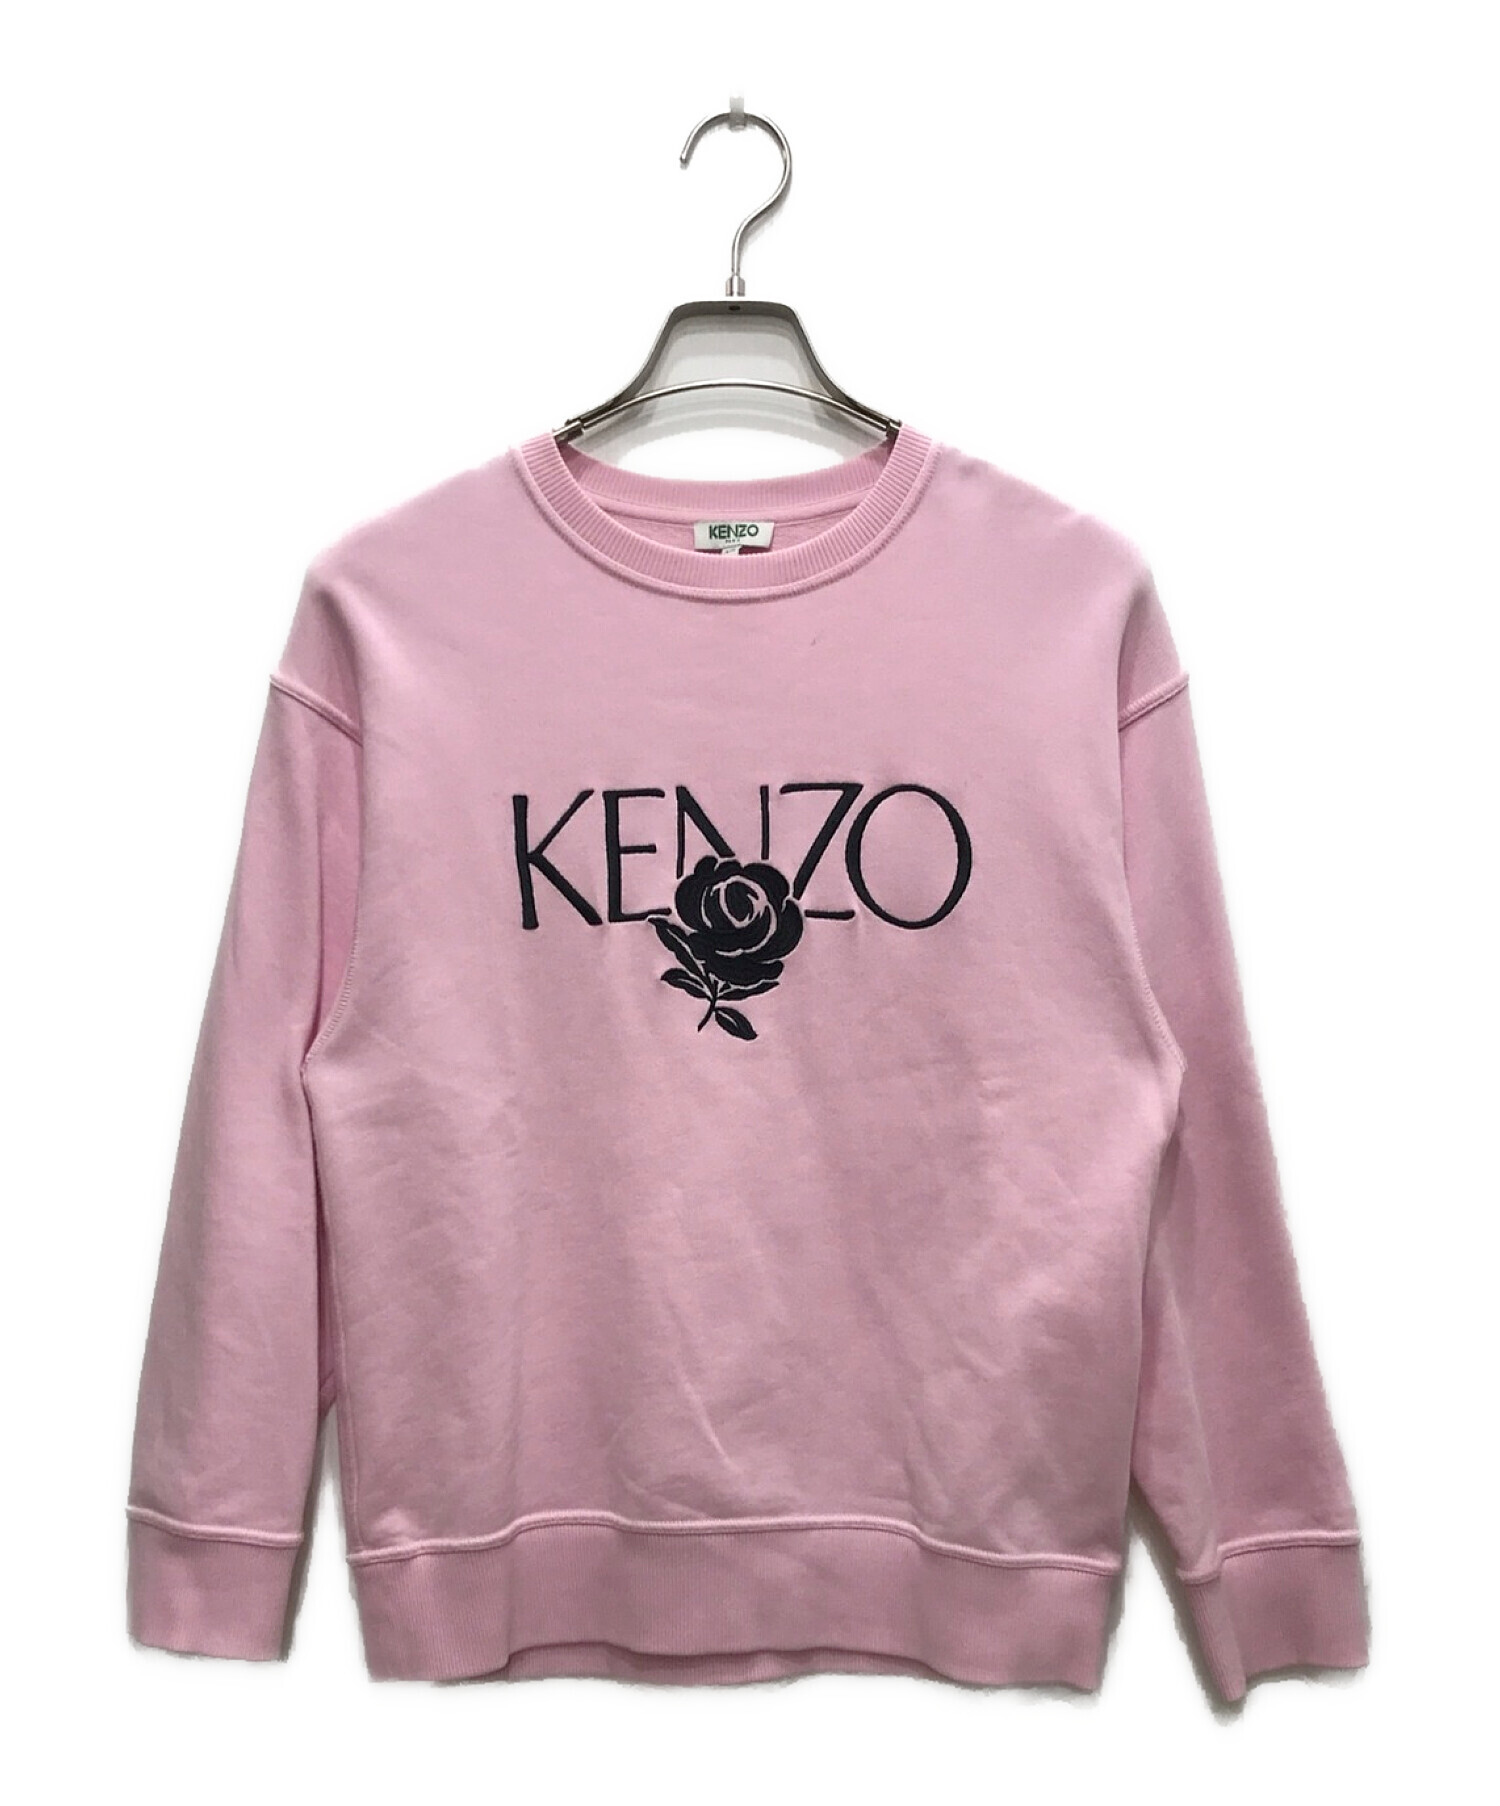 KENZO (ケンゾー) ローズ刺繍スウェット ピンク サイズ:XS